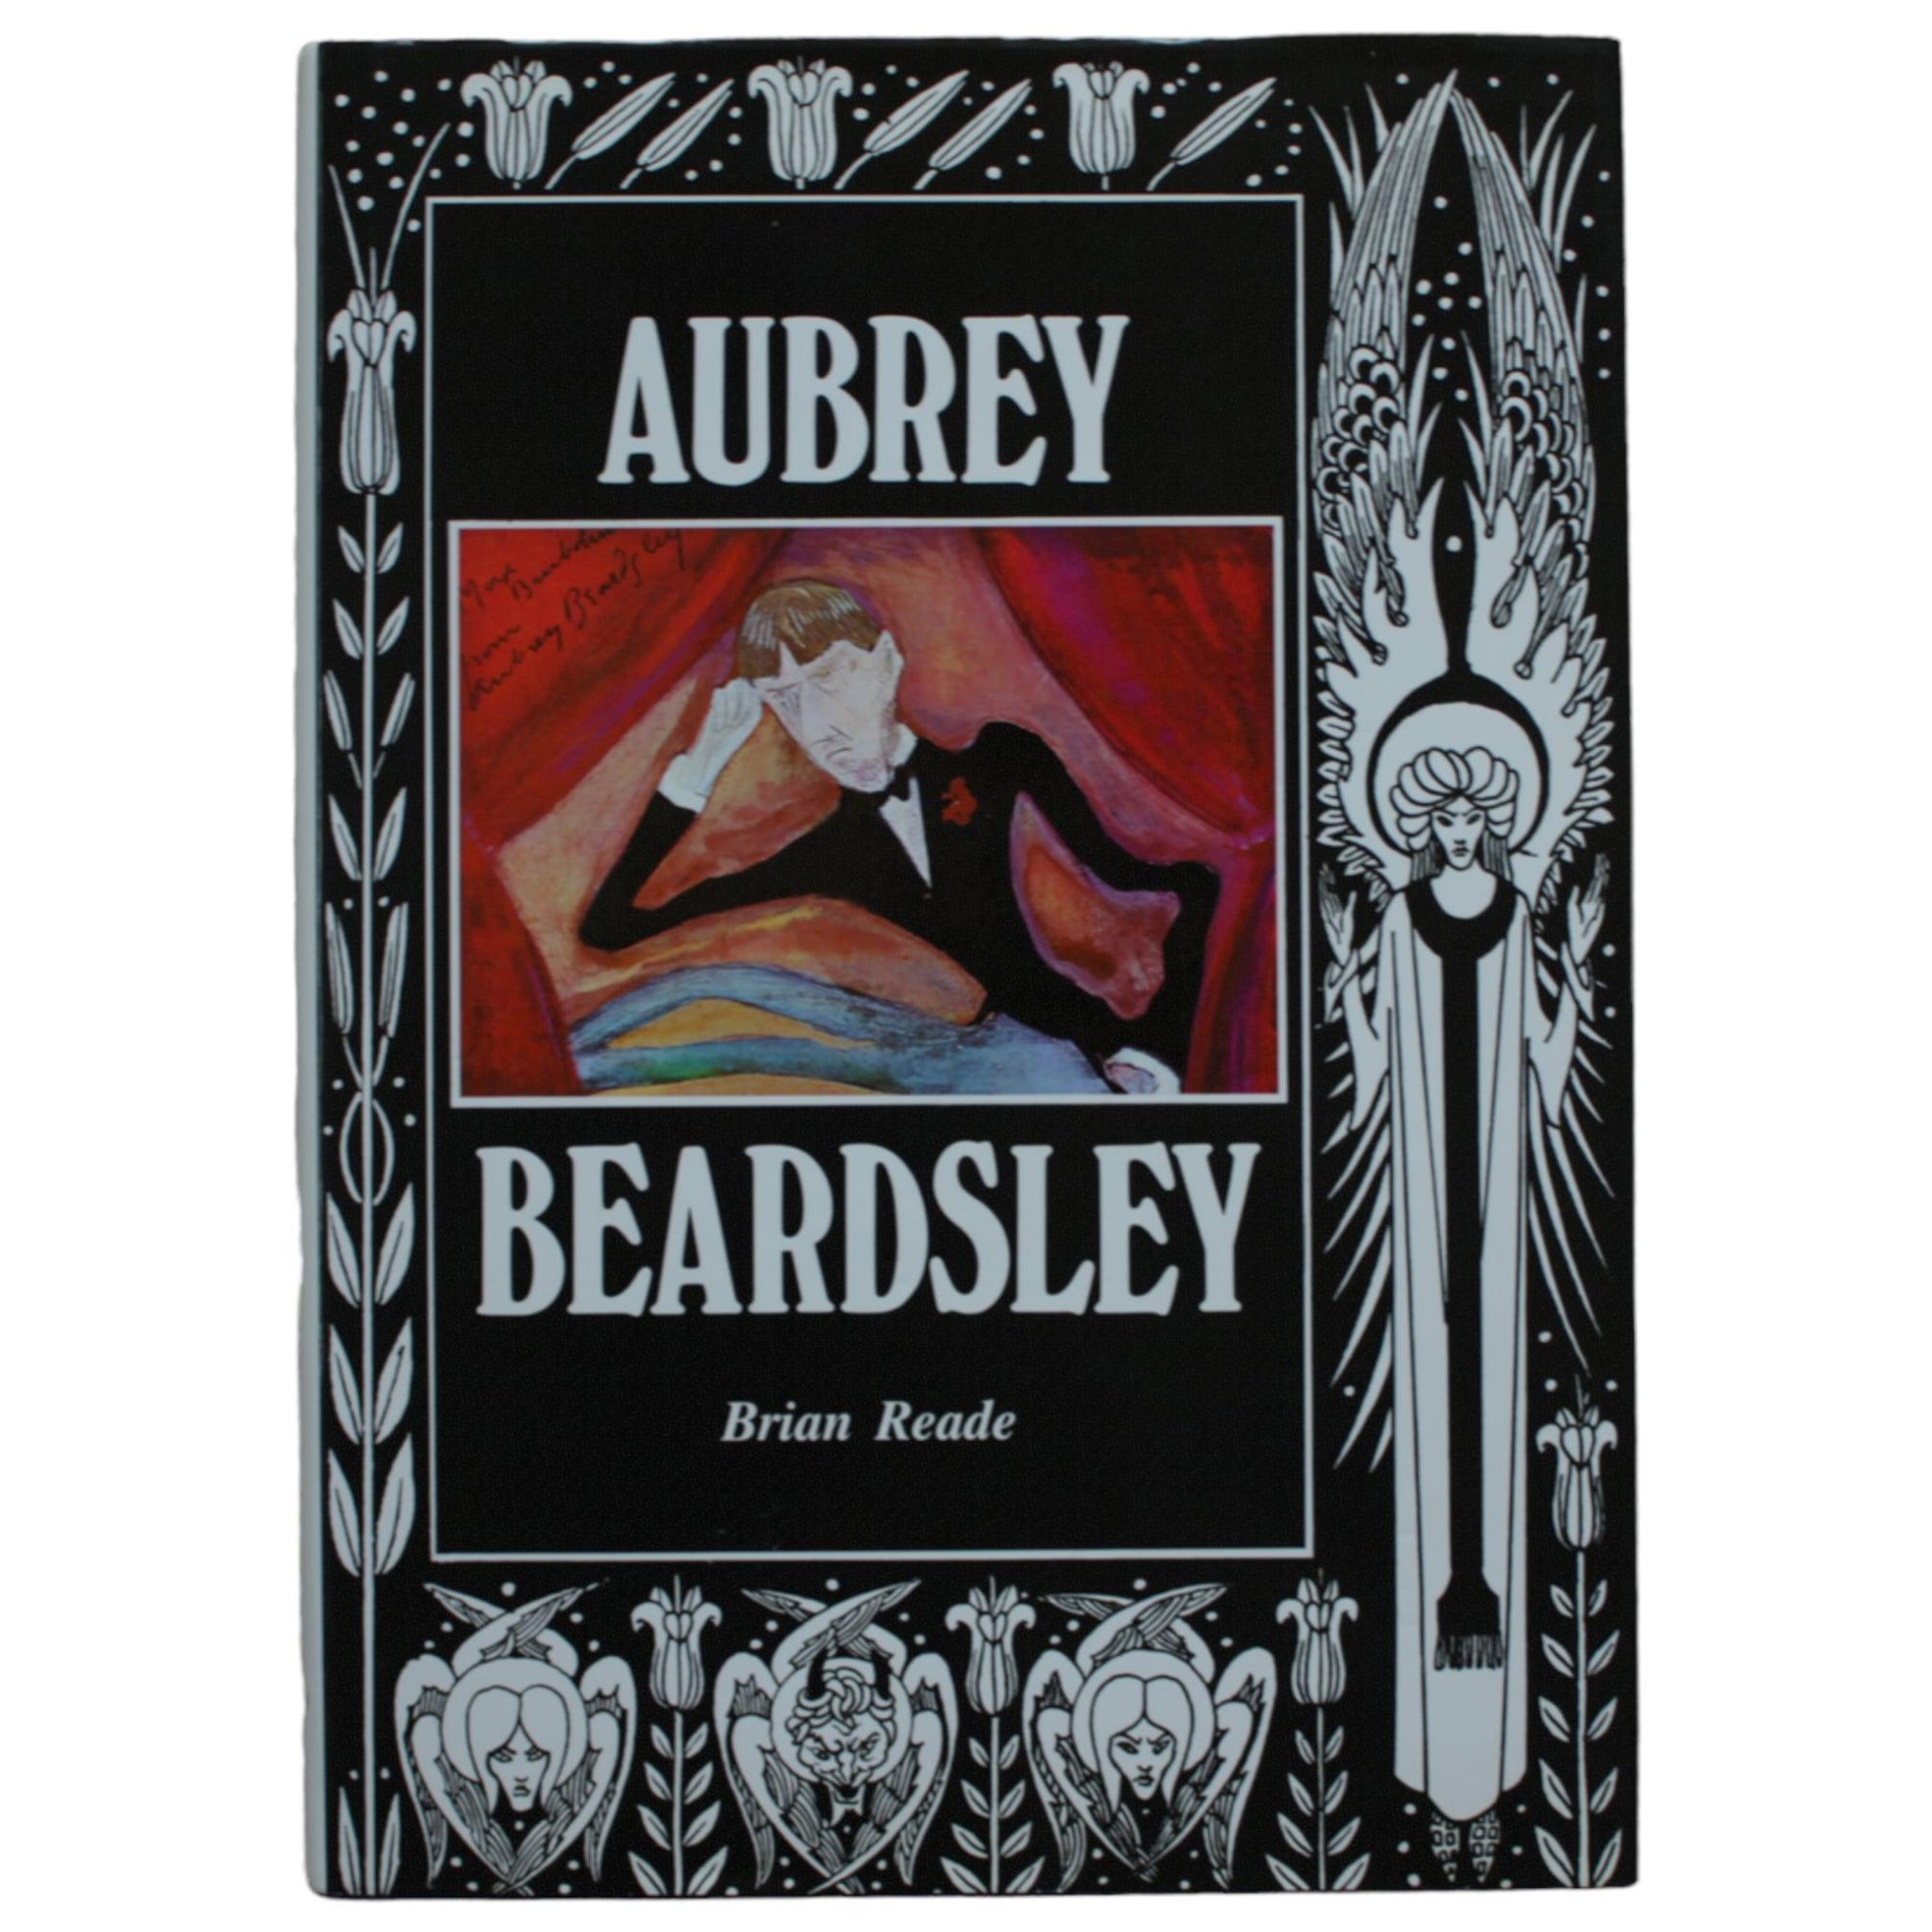 Aubrey Beardsley, Brian Reade, Hardcover, 1998, Art Book